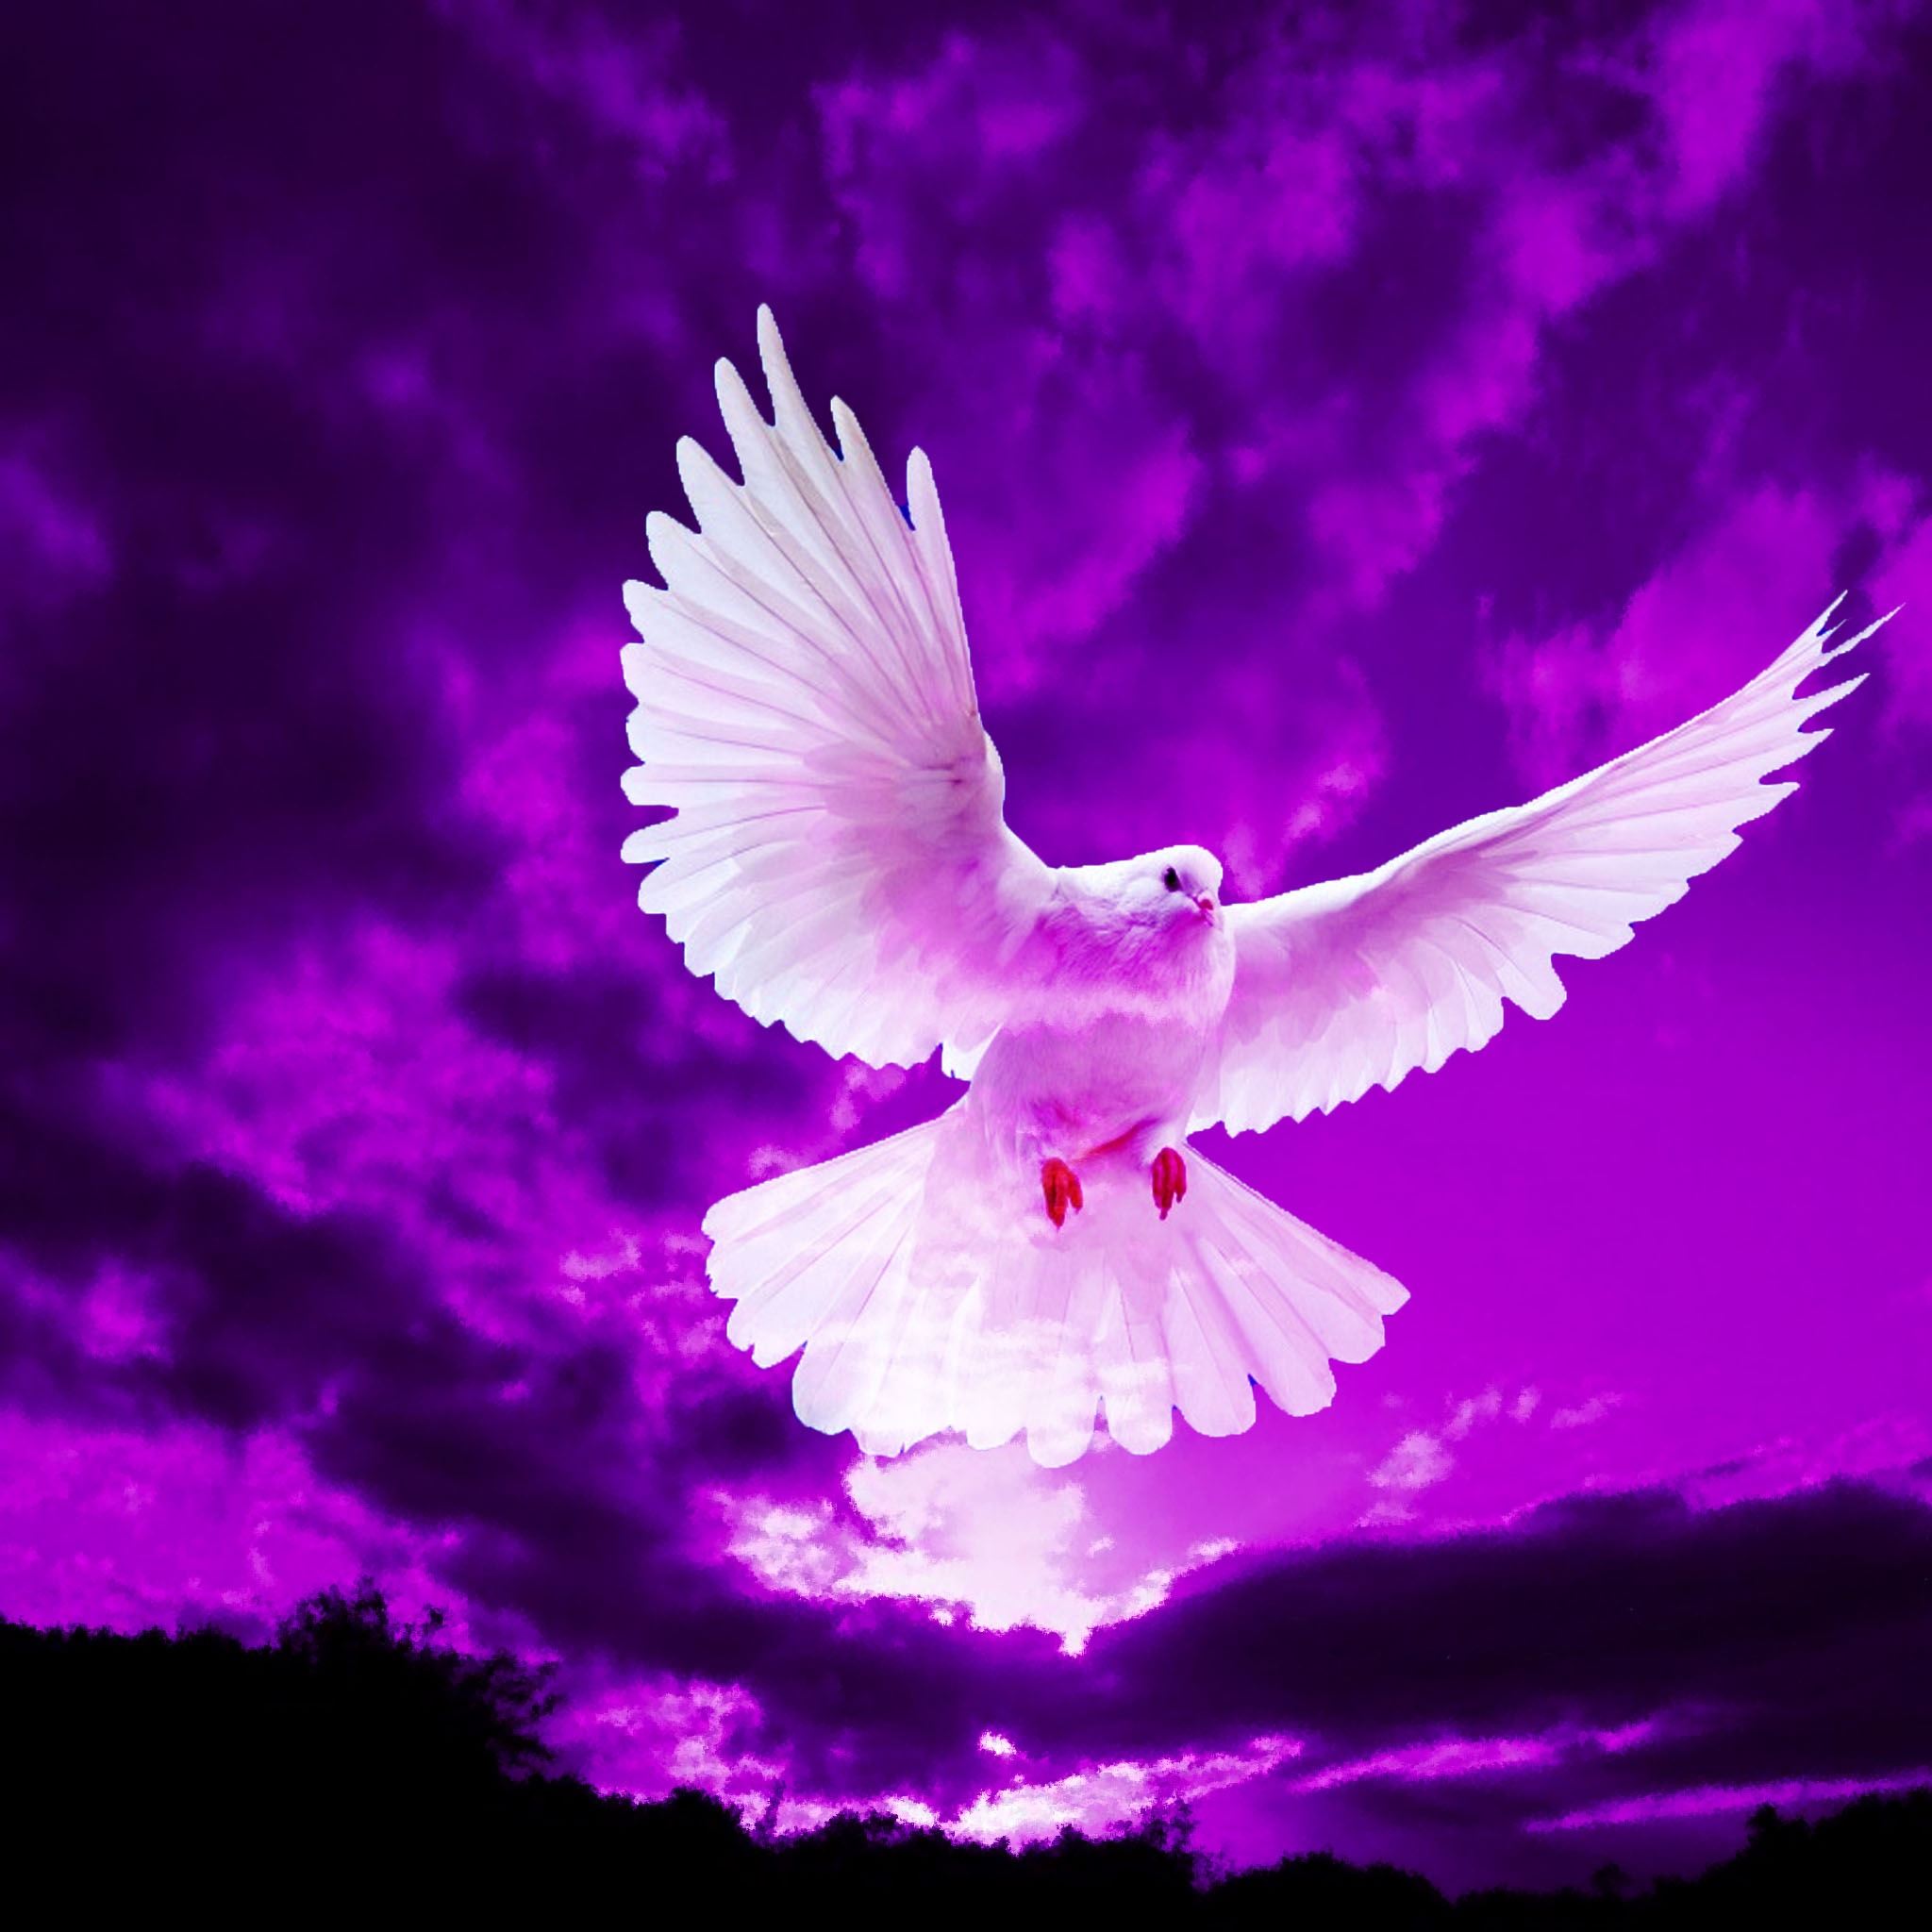 White pigeon image